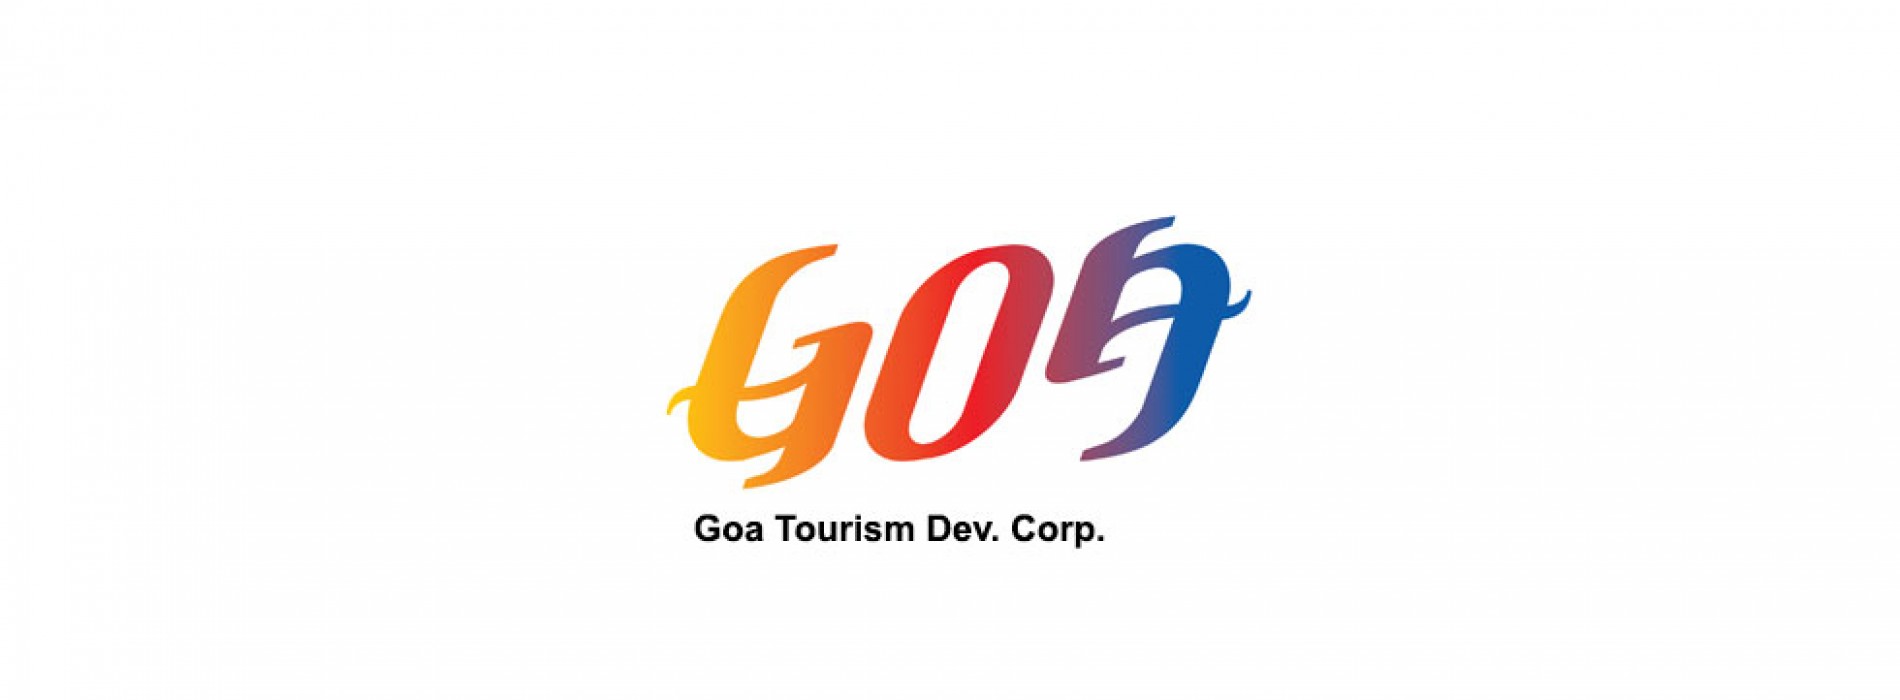 Tourist arrivals to Goa cross the five million mark in 2015